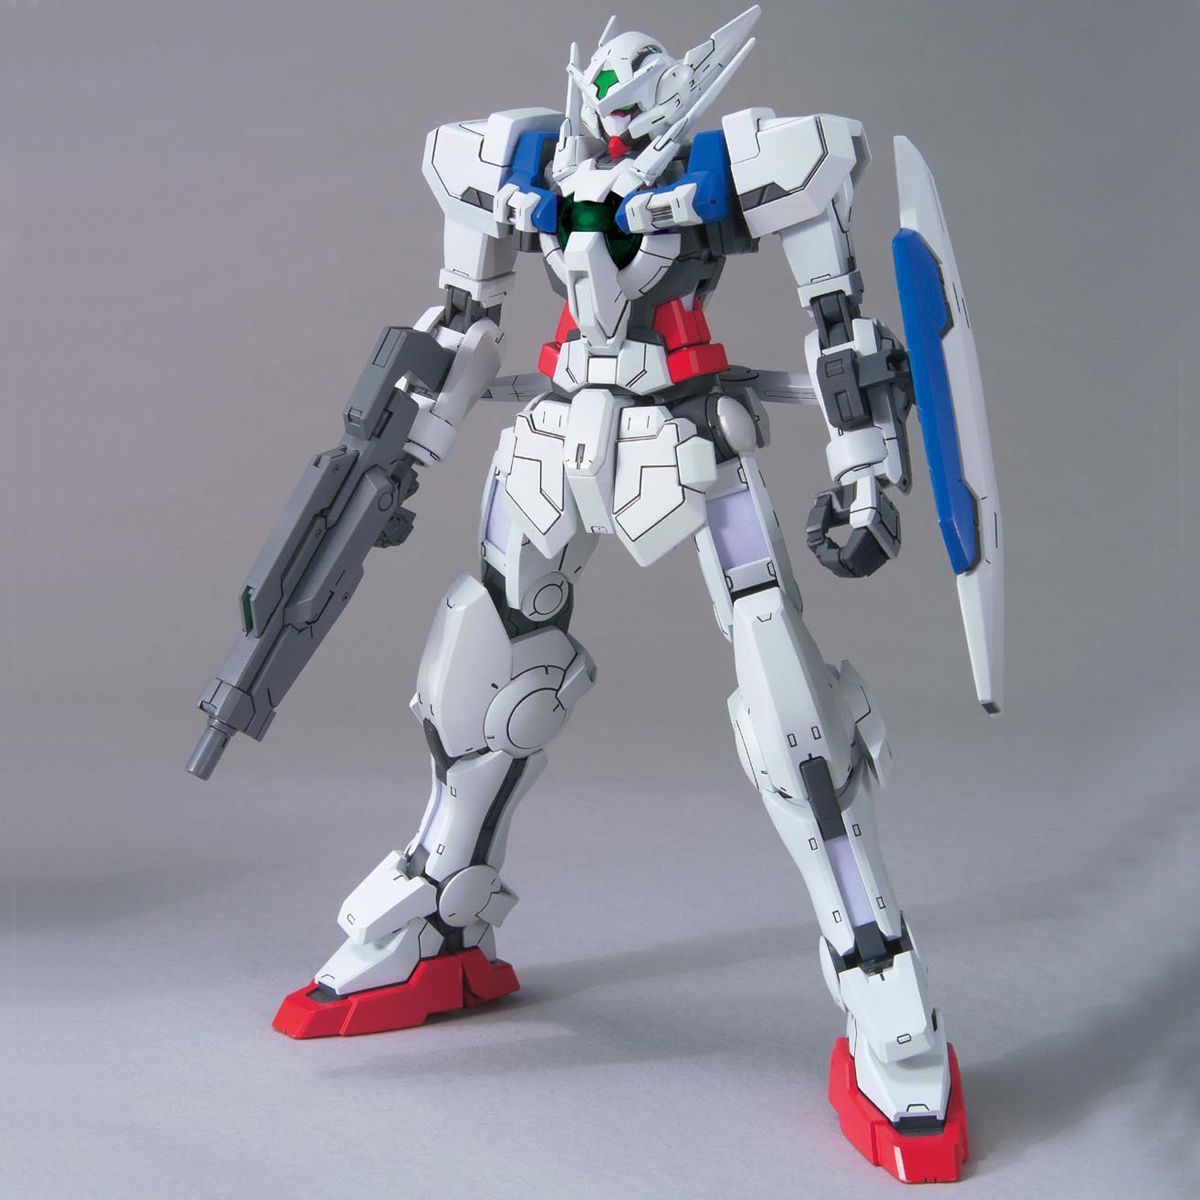 GNY-001 ガンダムアストレア [Gundam Astraea]